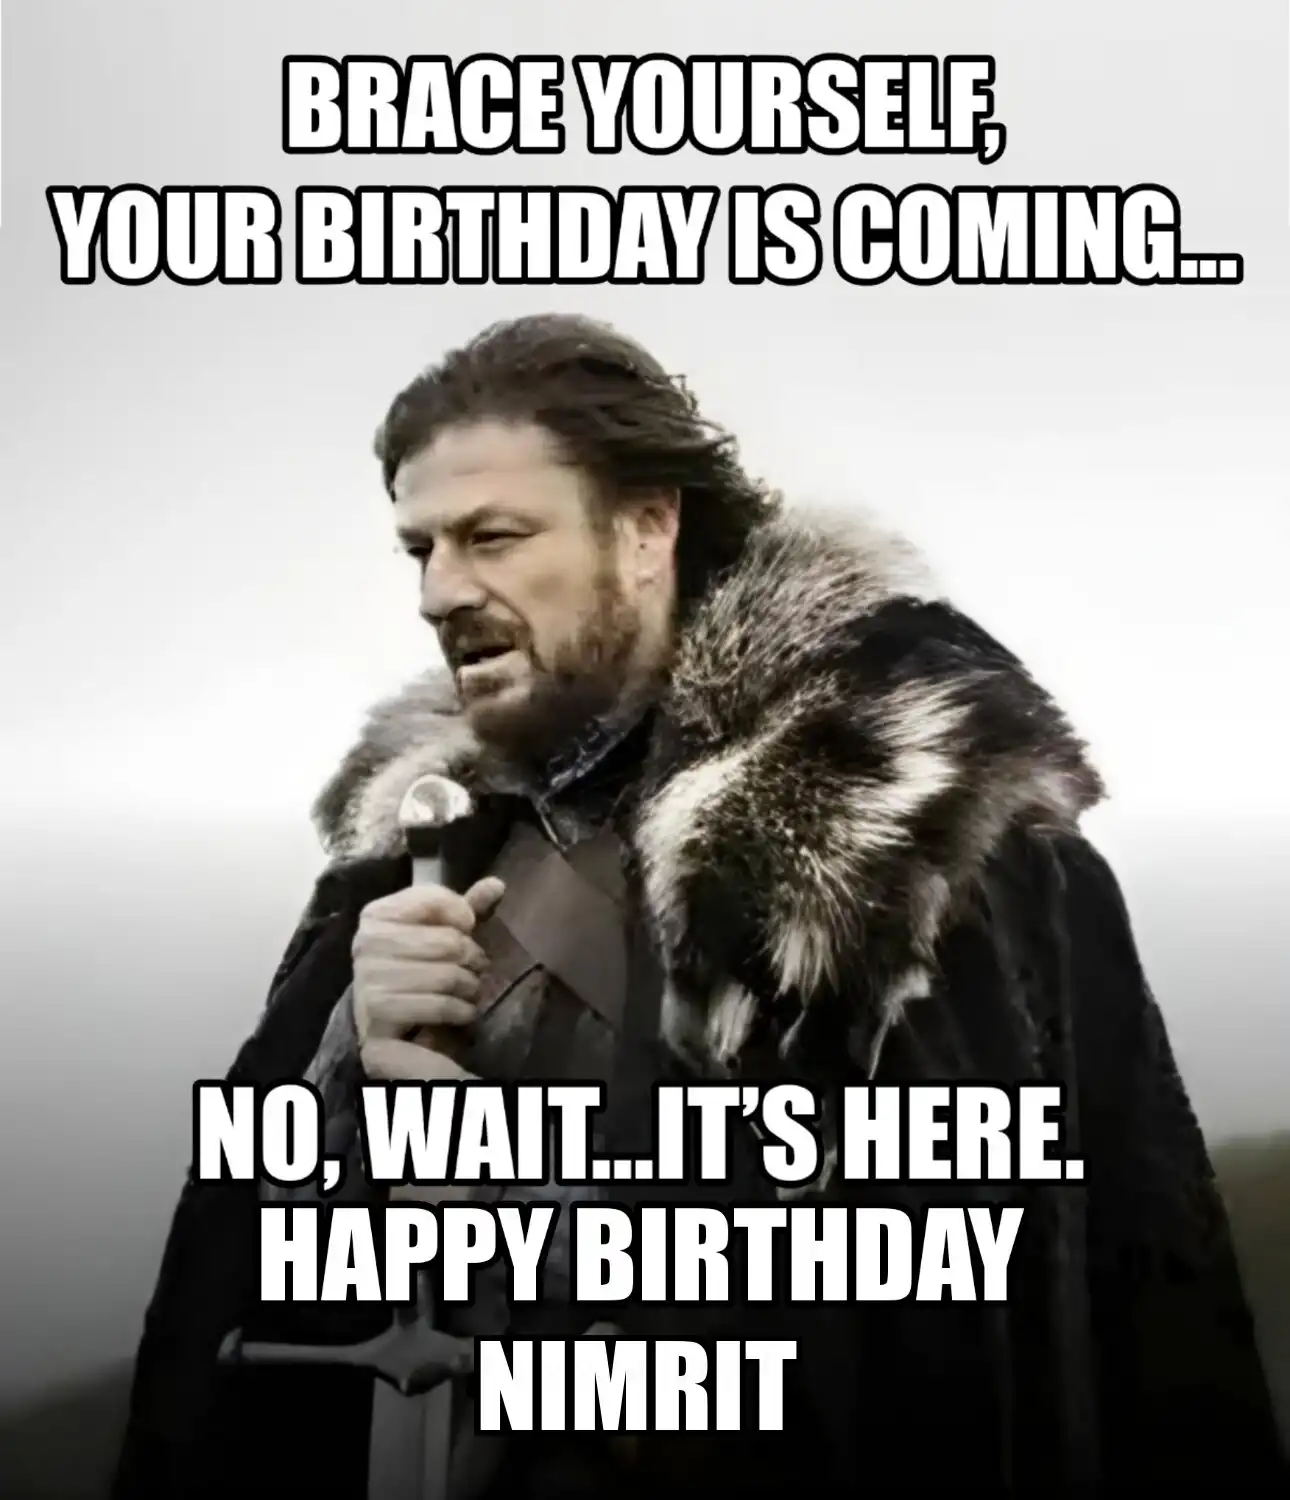 Happy Birthday Nimrit Brace Yourself Your Birthday Is Coming Meme